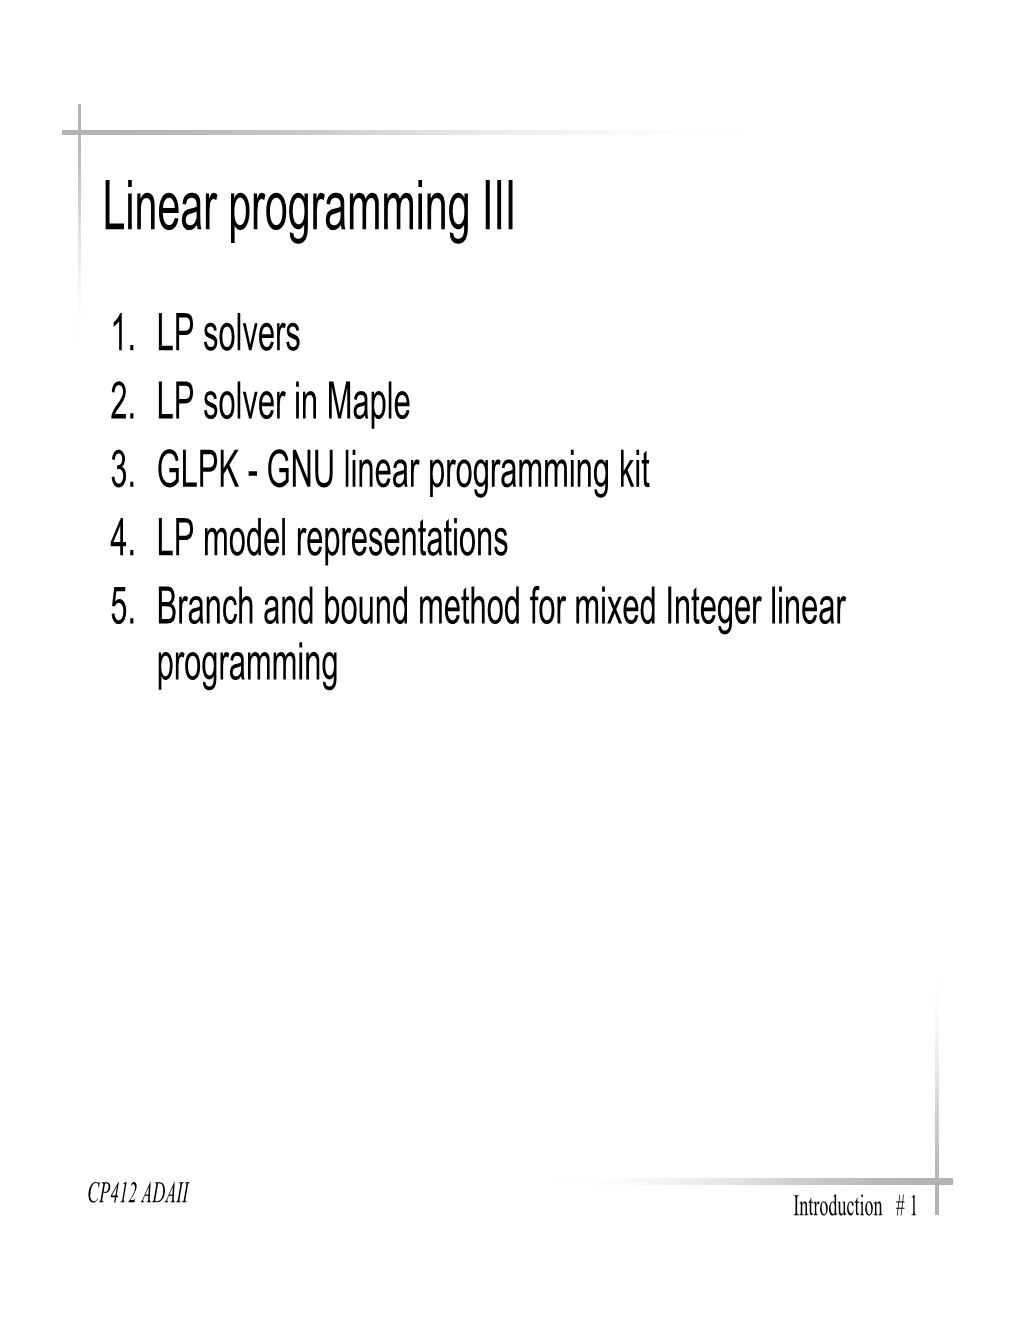 Linear Programming III